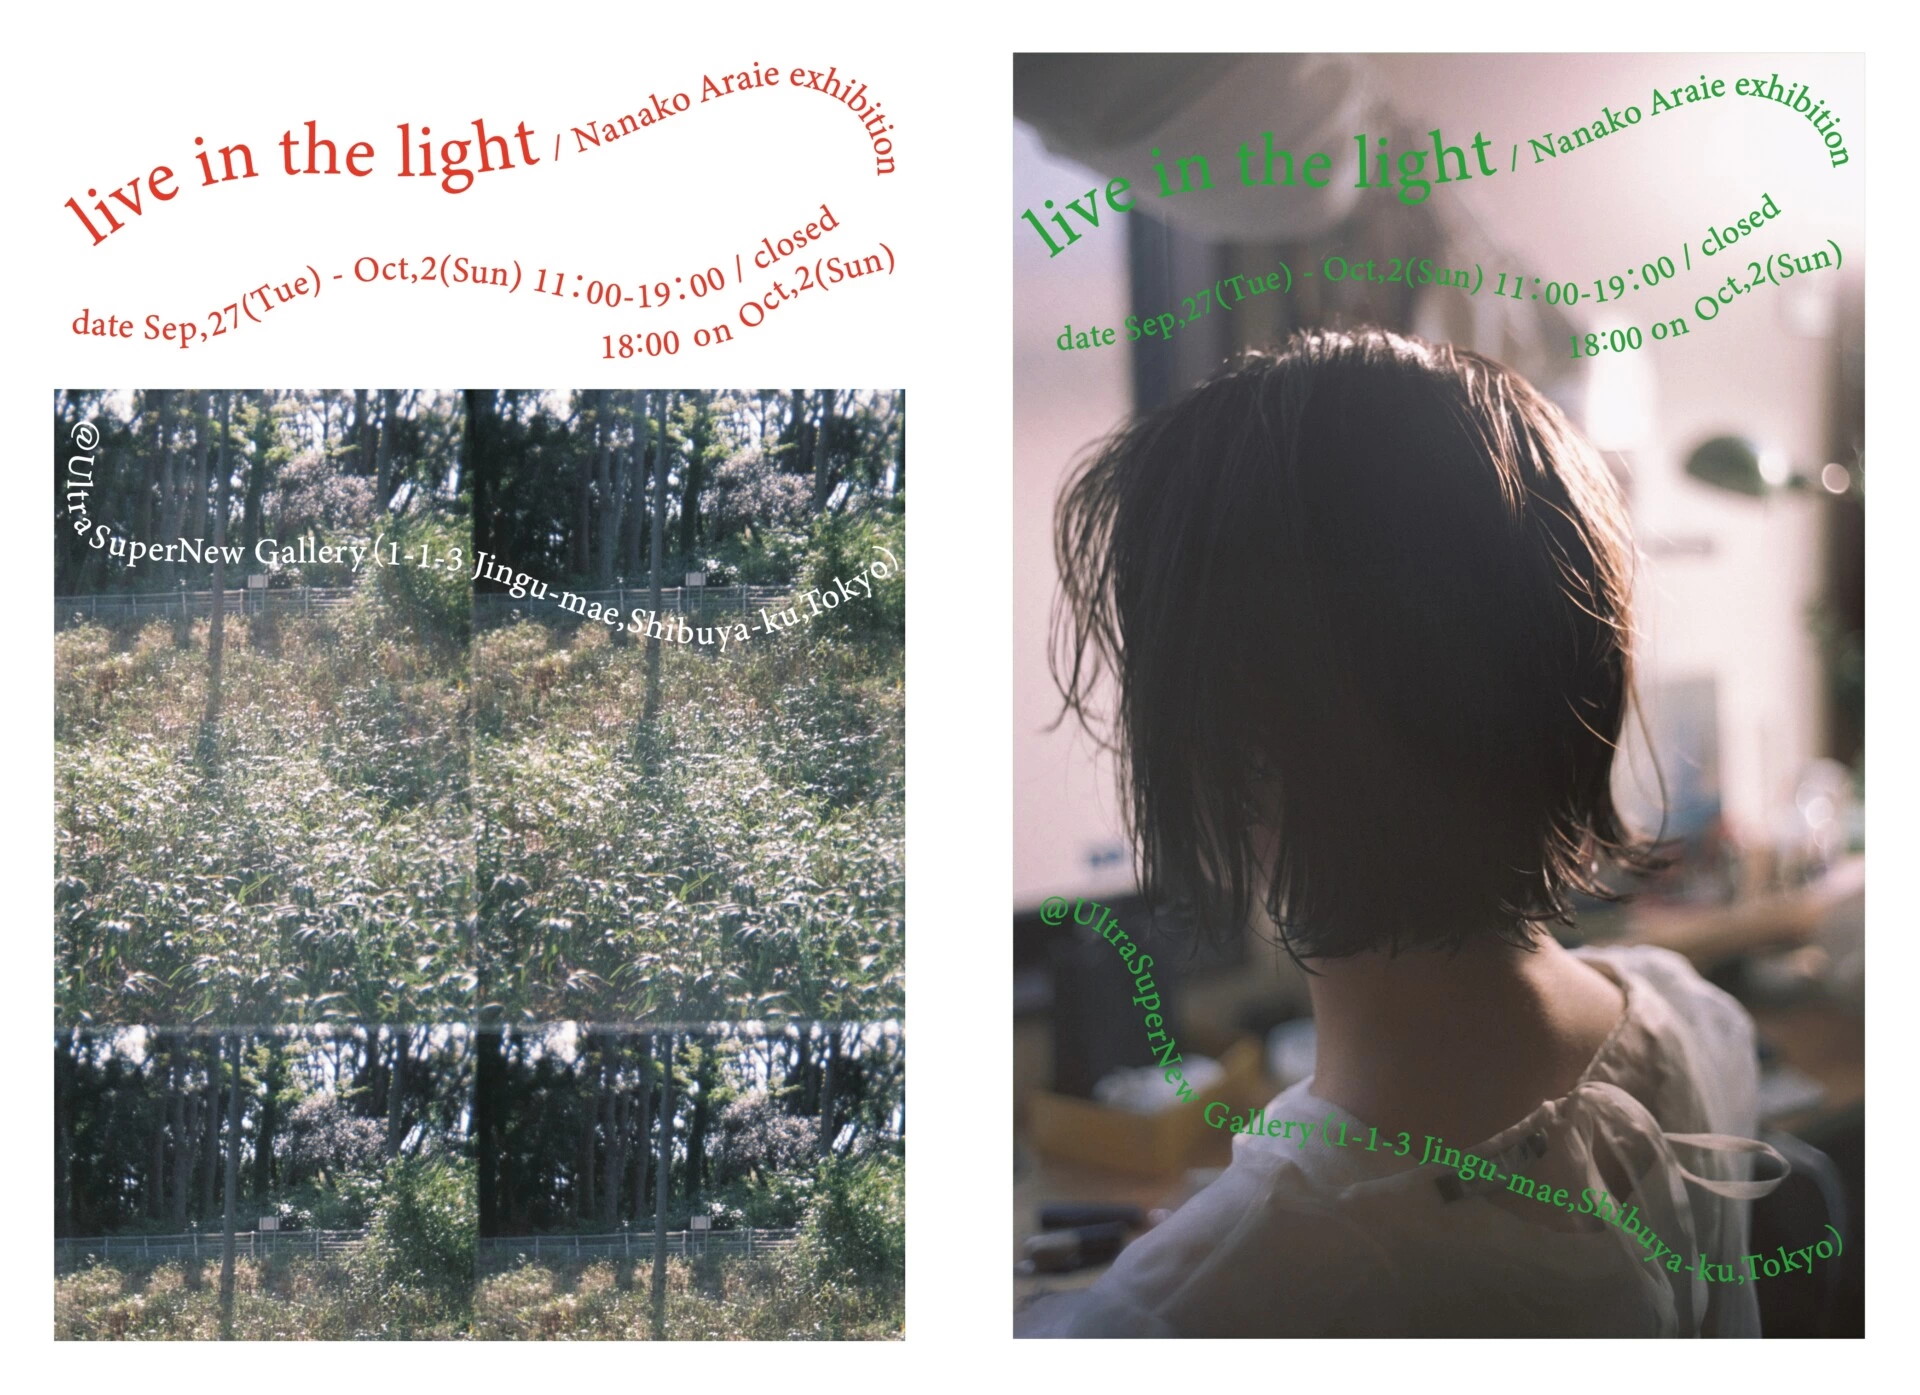 Nanako Araie exhibition / live in the light